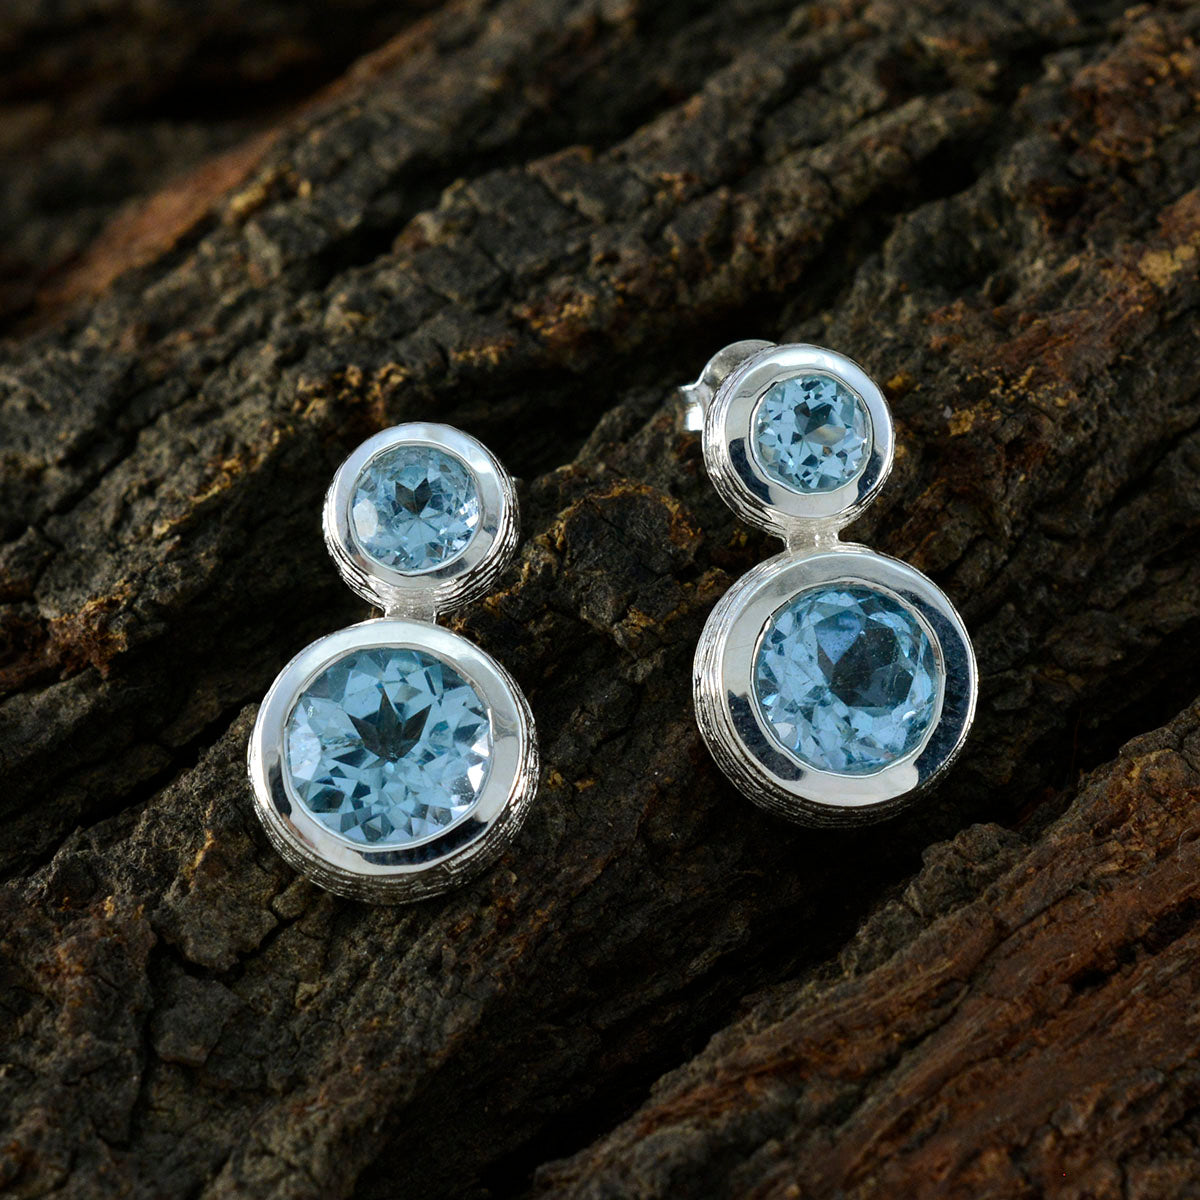 Riyo Pretty 925 Sterling Silber Ohrring für Damsel Blue Topas Ohrring Lünette Fassung Blauer Ohrring Ohrstecker